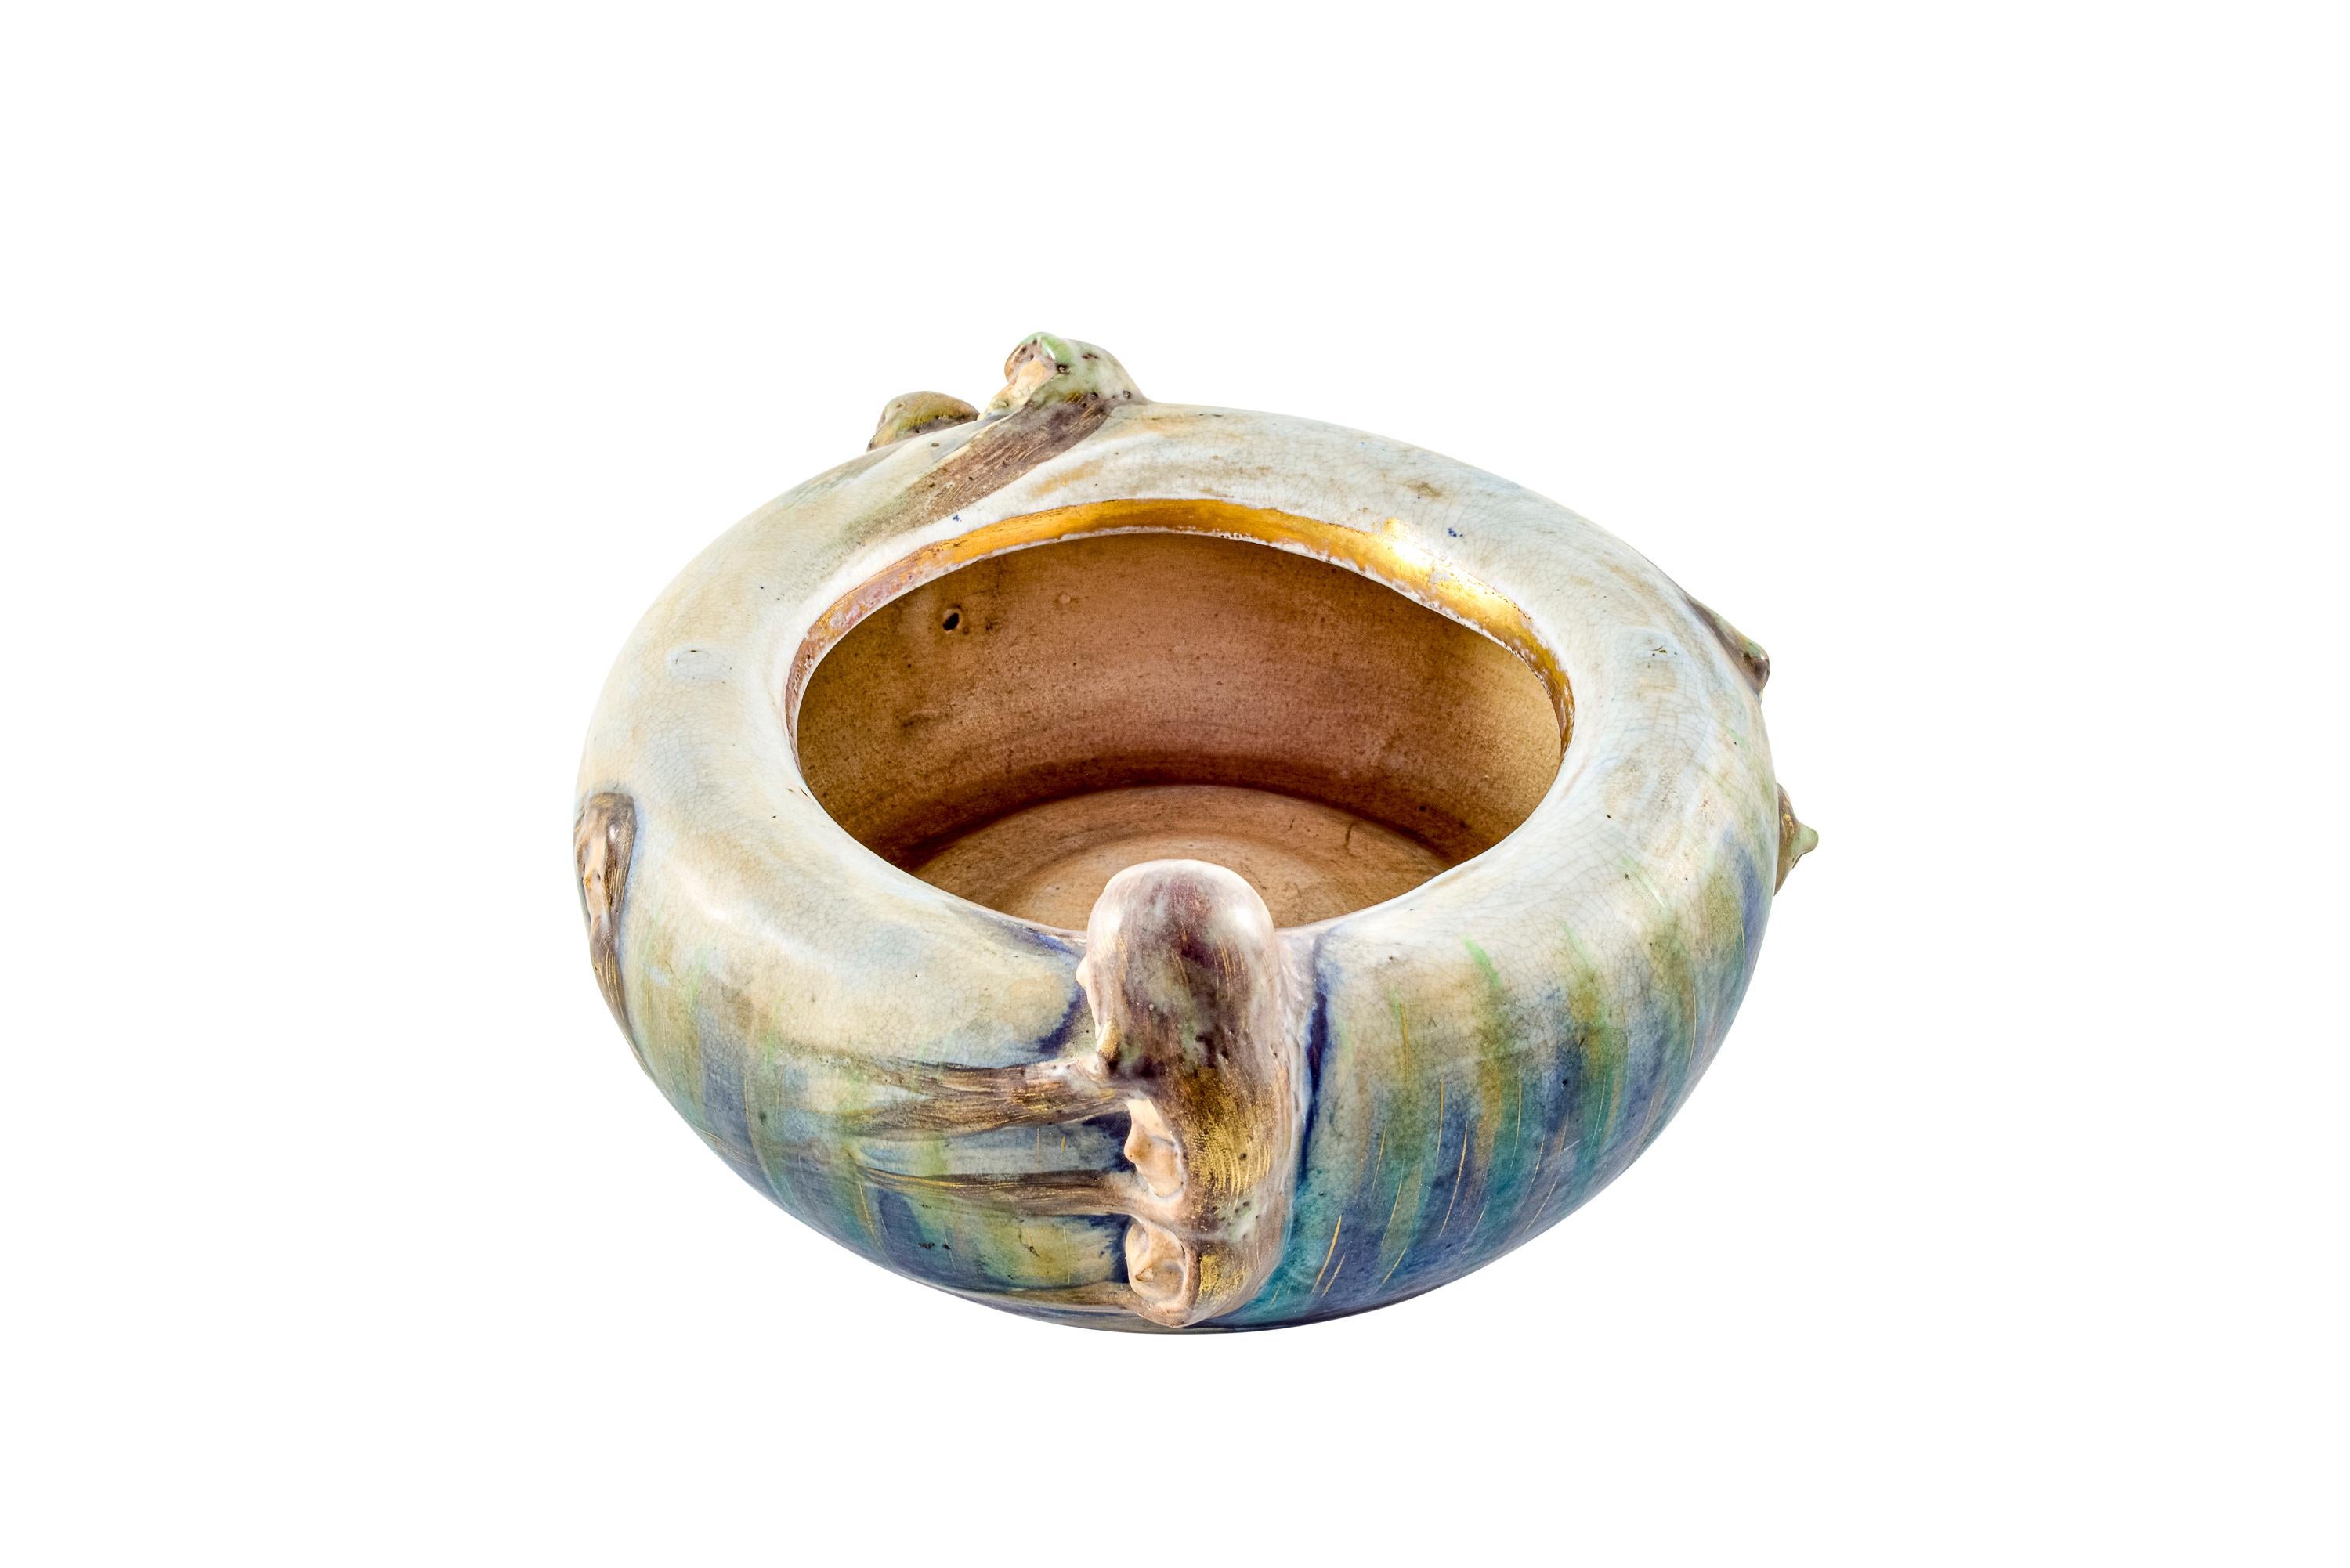 Austrian Art Nouveau symbolistic ceramic bowl from the 